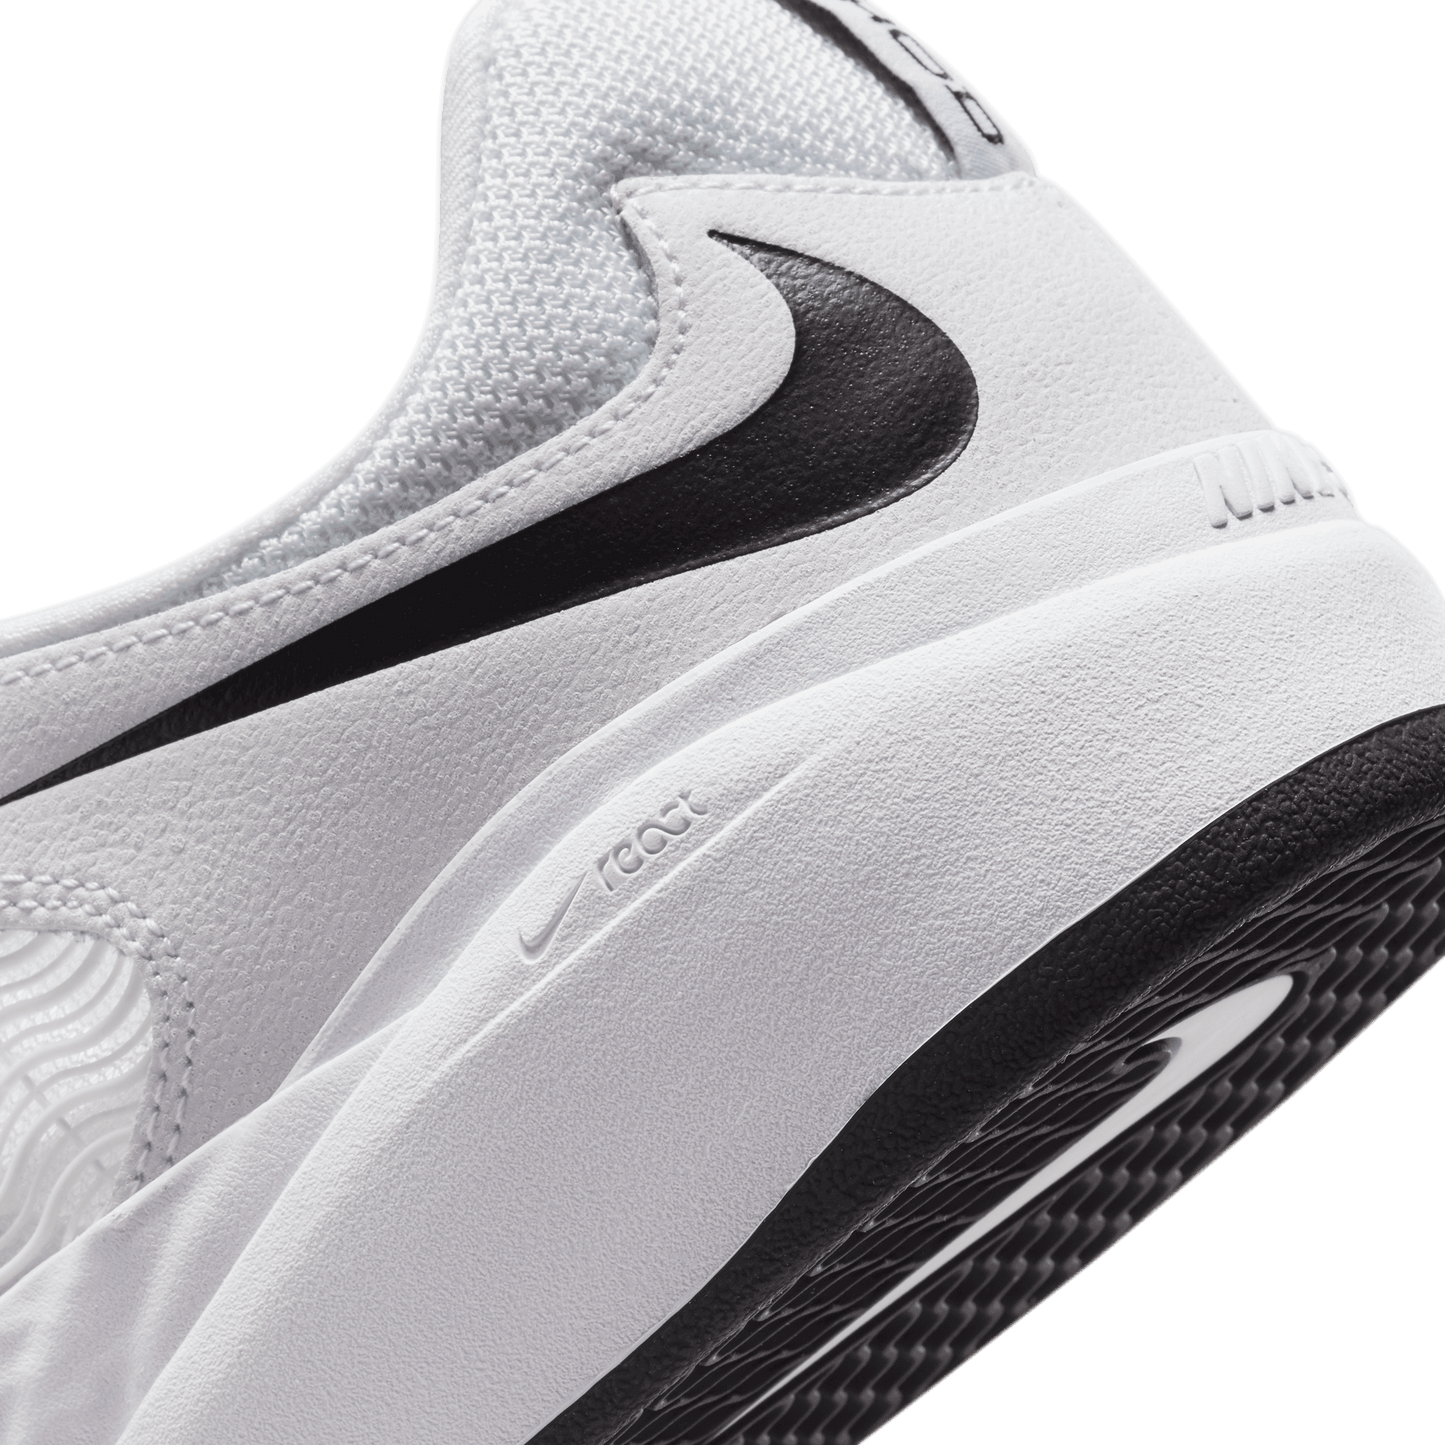 Nike SB Ishod Wair Premium white black white black